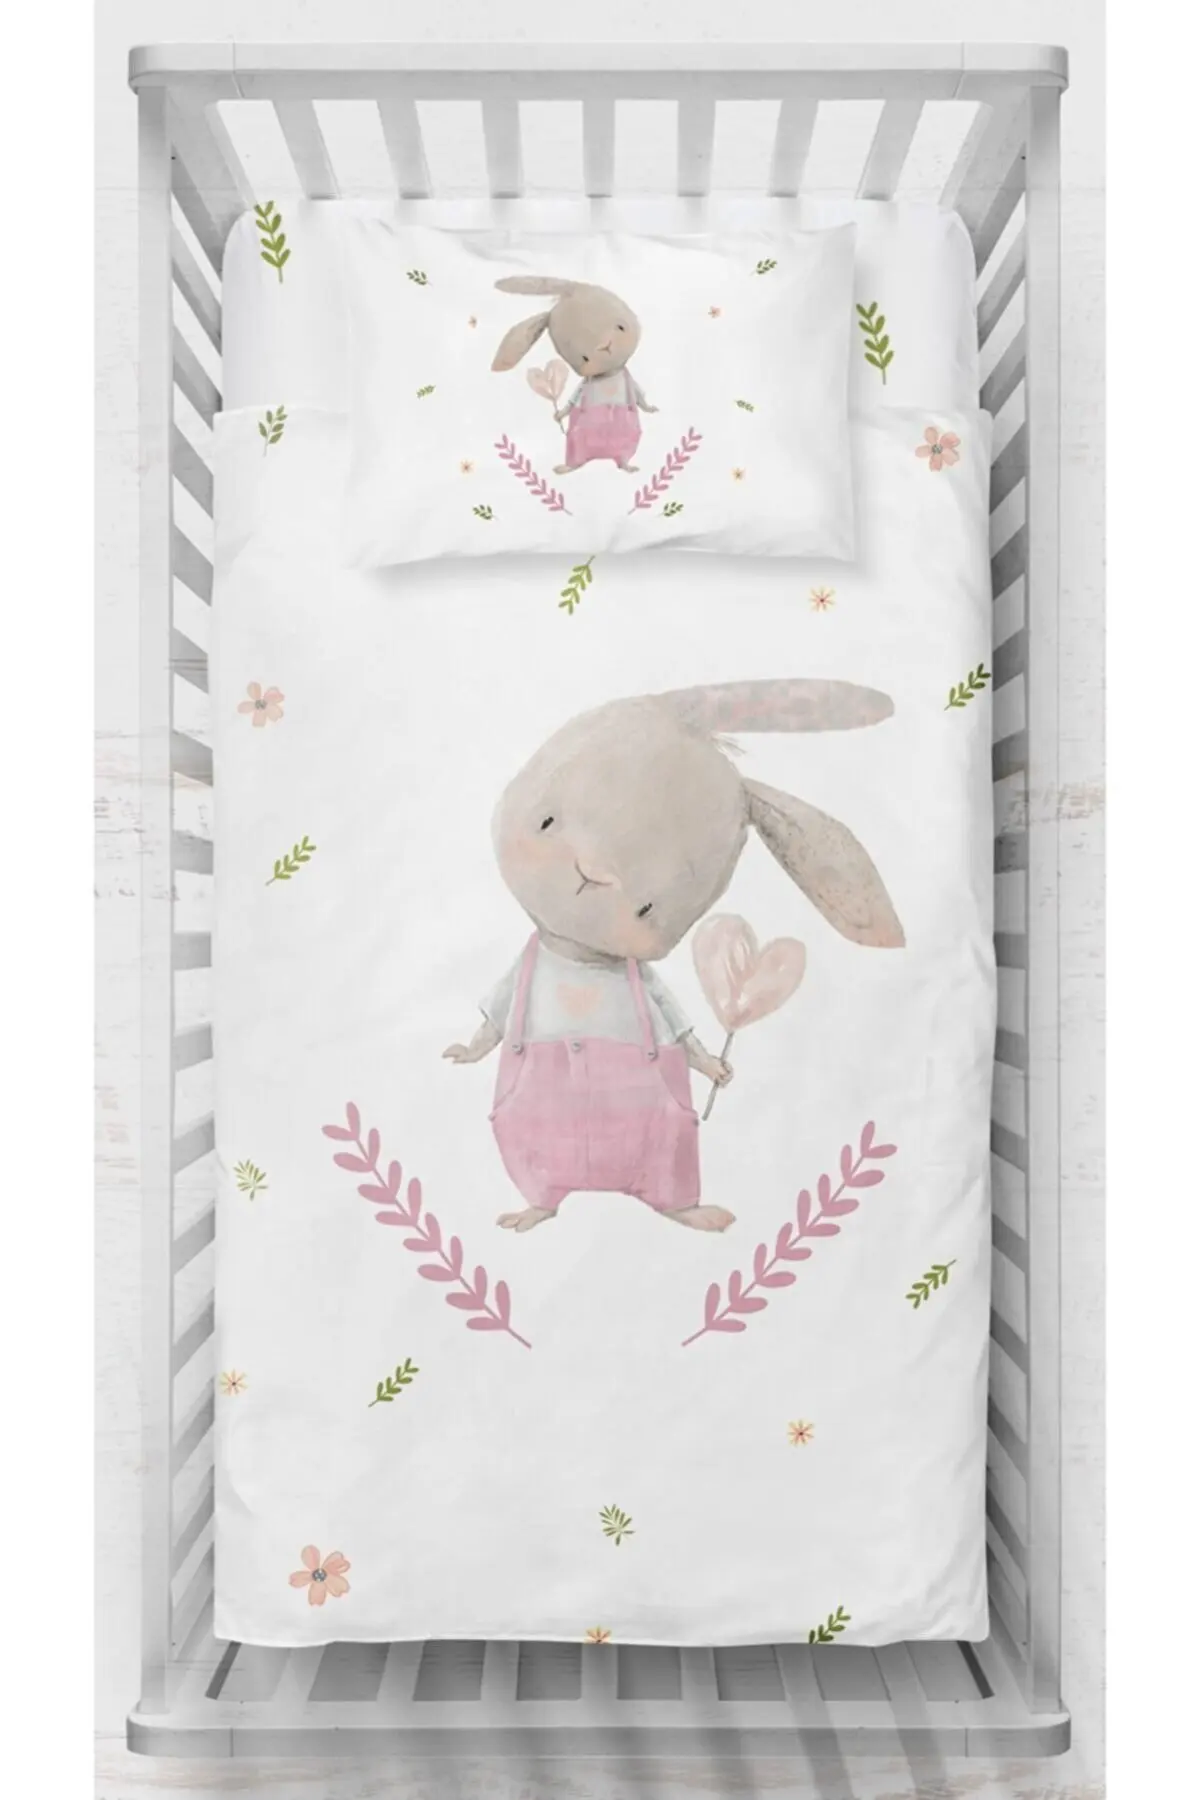 3Pcs/Set Satin Baby Bedding Set Cartoon Animal Print Baby Crib Bed For Newborns Infant Bedding Set 100% Soft Comfortable Cotton